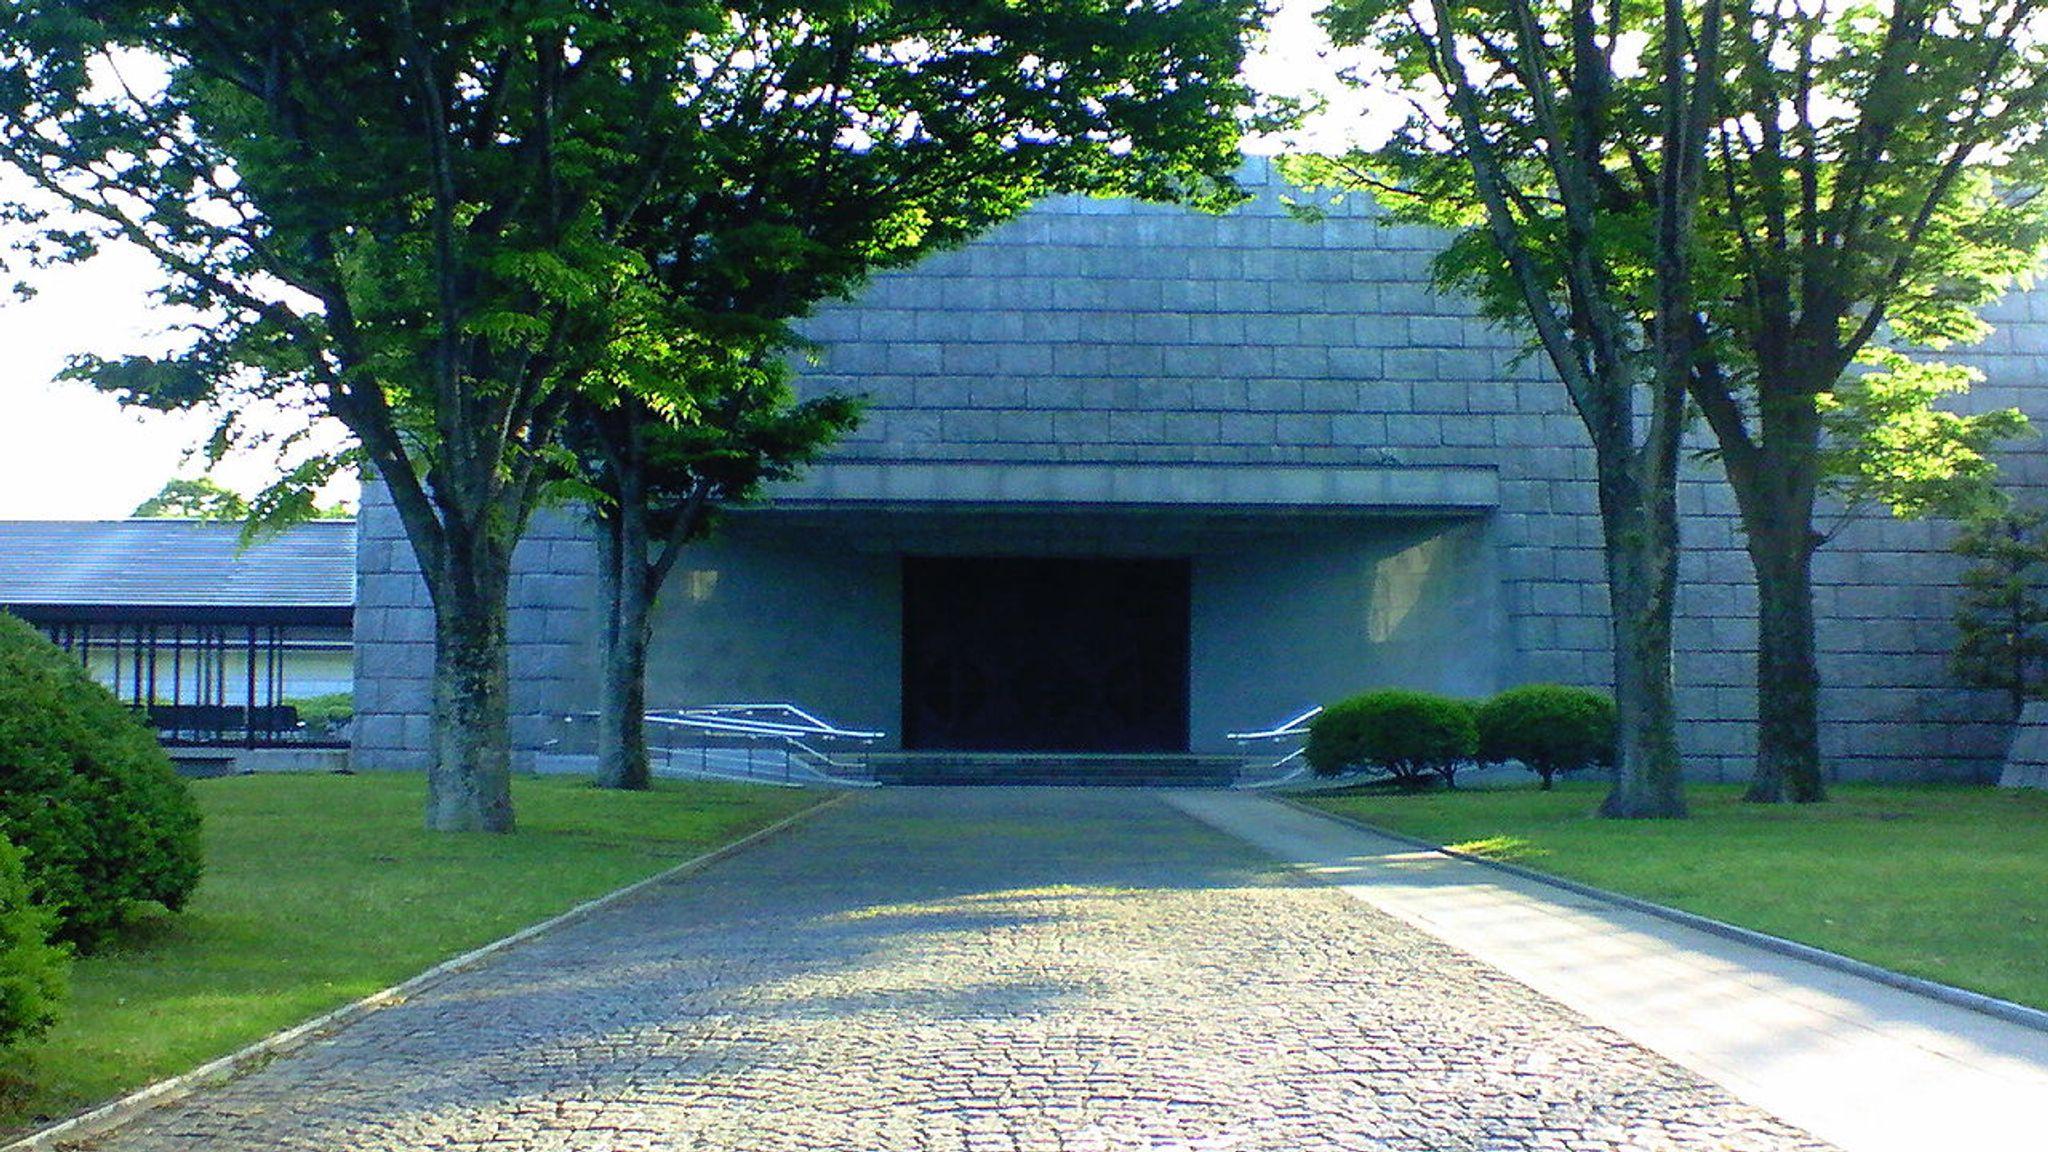 <a href="https://commons.wikimedia.org/wiki/File:Main-building-of-ibaraki-prefectural-museum-of-history.jpeg">YuBon (Yu TANAKA)</a>, Public domain, via Wikimedia Commons